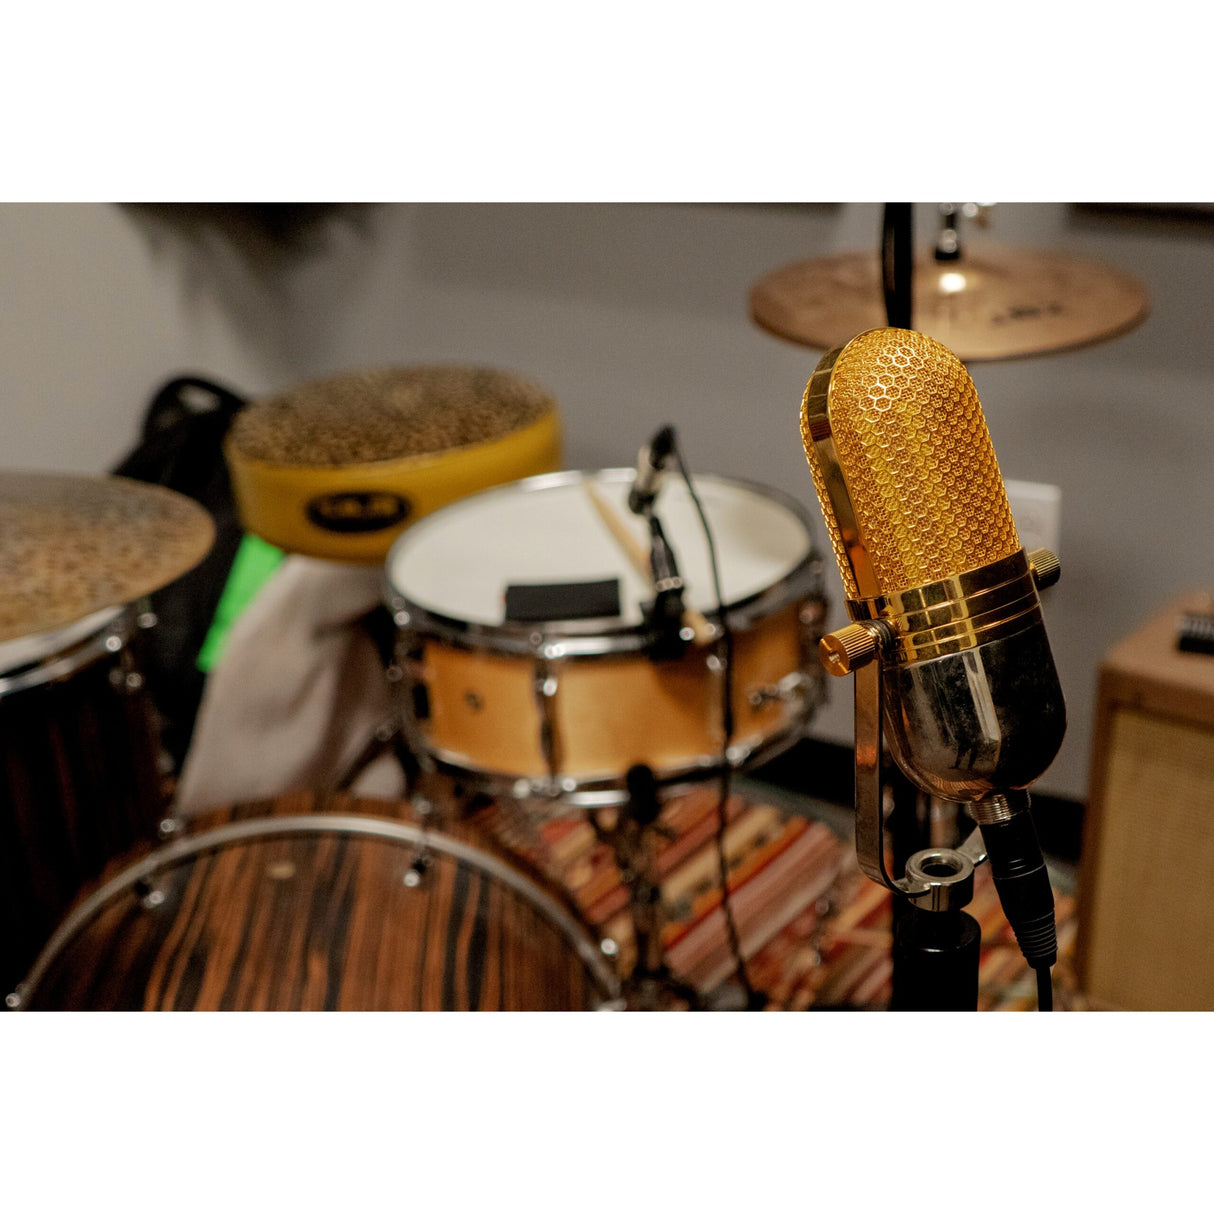 MXL R77 | Classic Ribbon Studio Vocal Recording Microphone